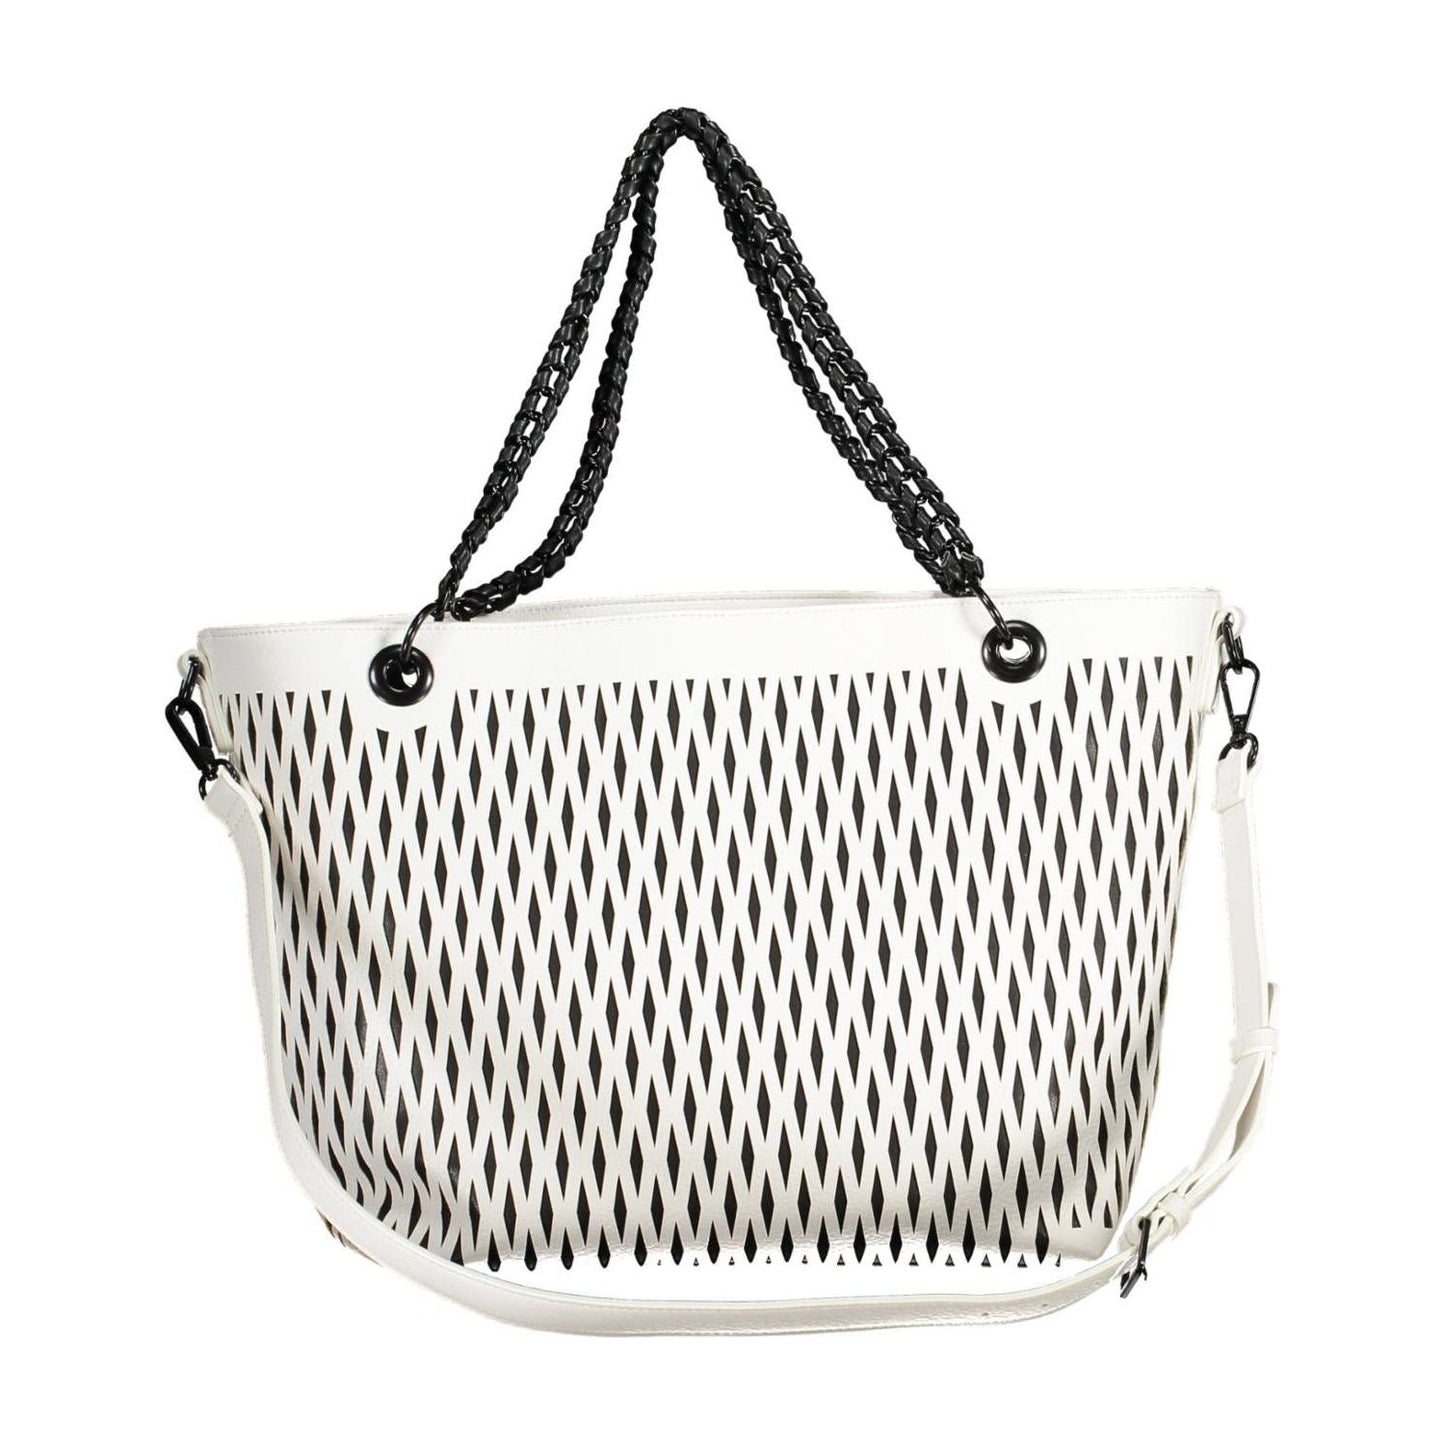 Desigual Chic White Chain-Handle Shoulder Bag chic-white-chain-handle-shoulder-bag